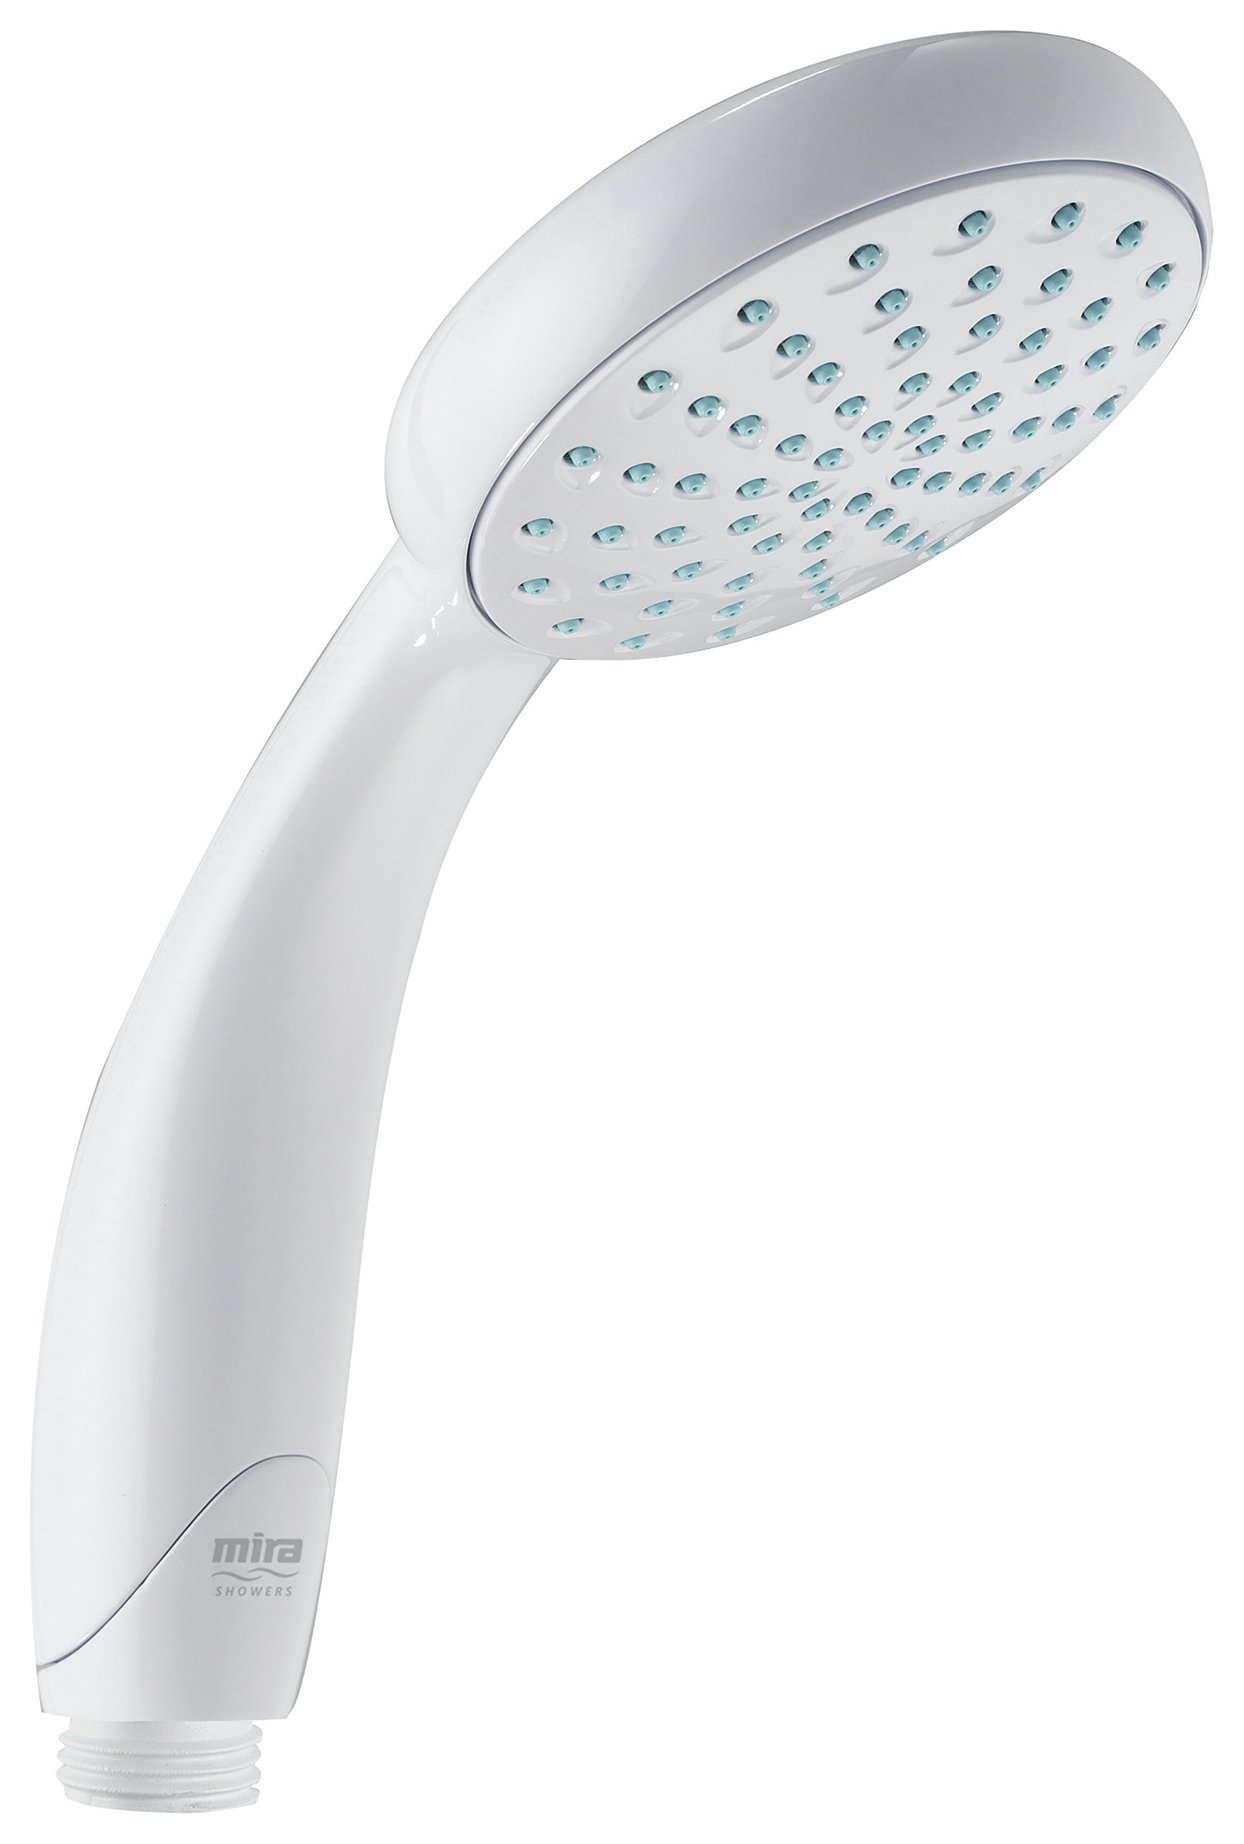 Mira Nectar Single Spray 9cm Shower Head - White.